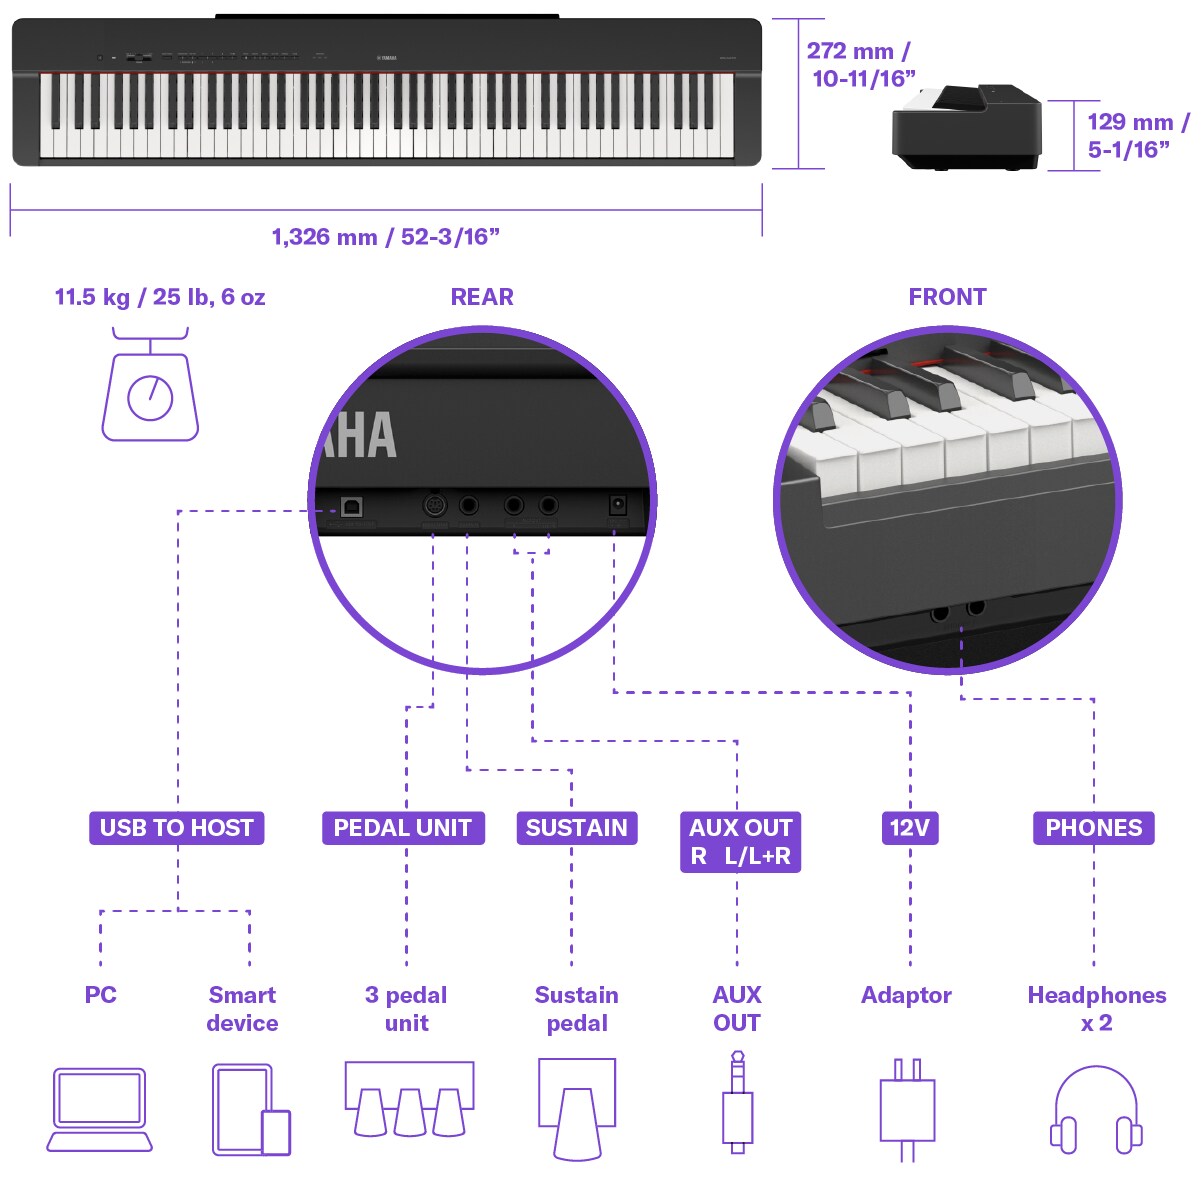 Yamaha P225B Portable Digital Piano Premium Package Black